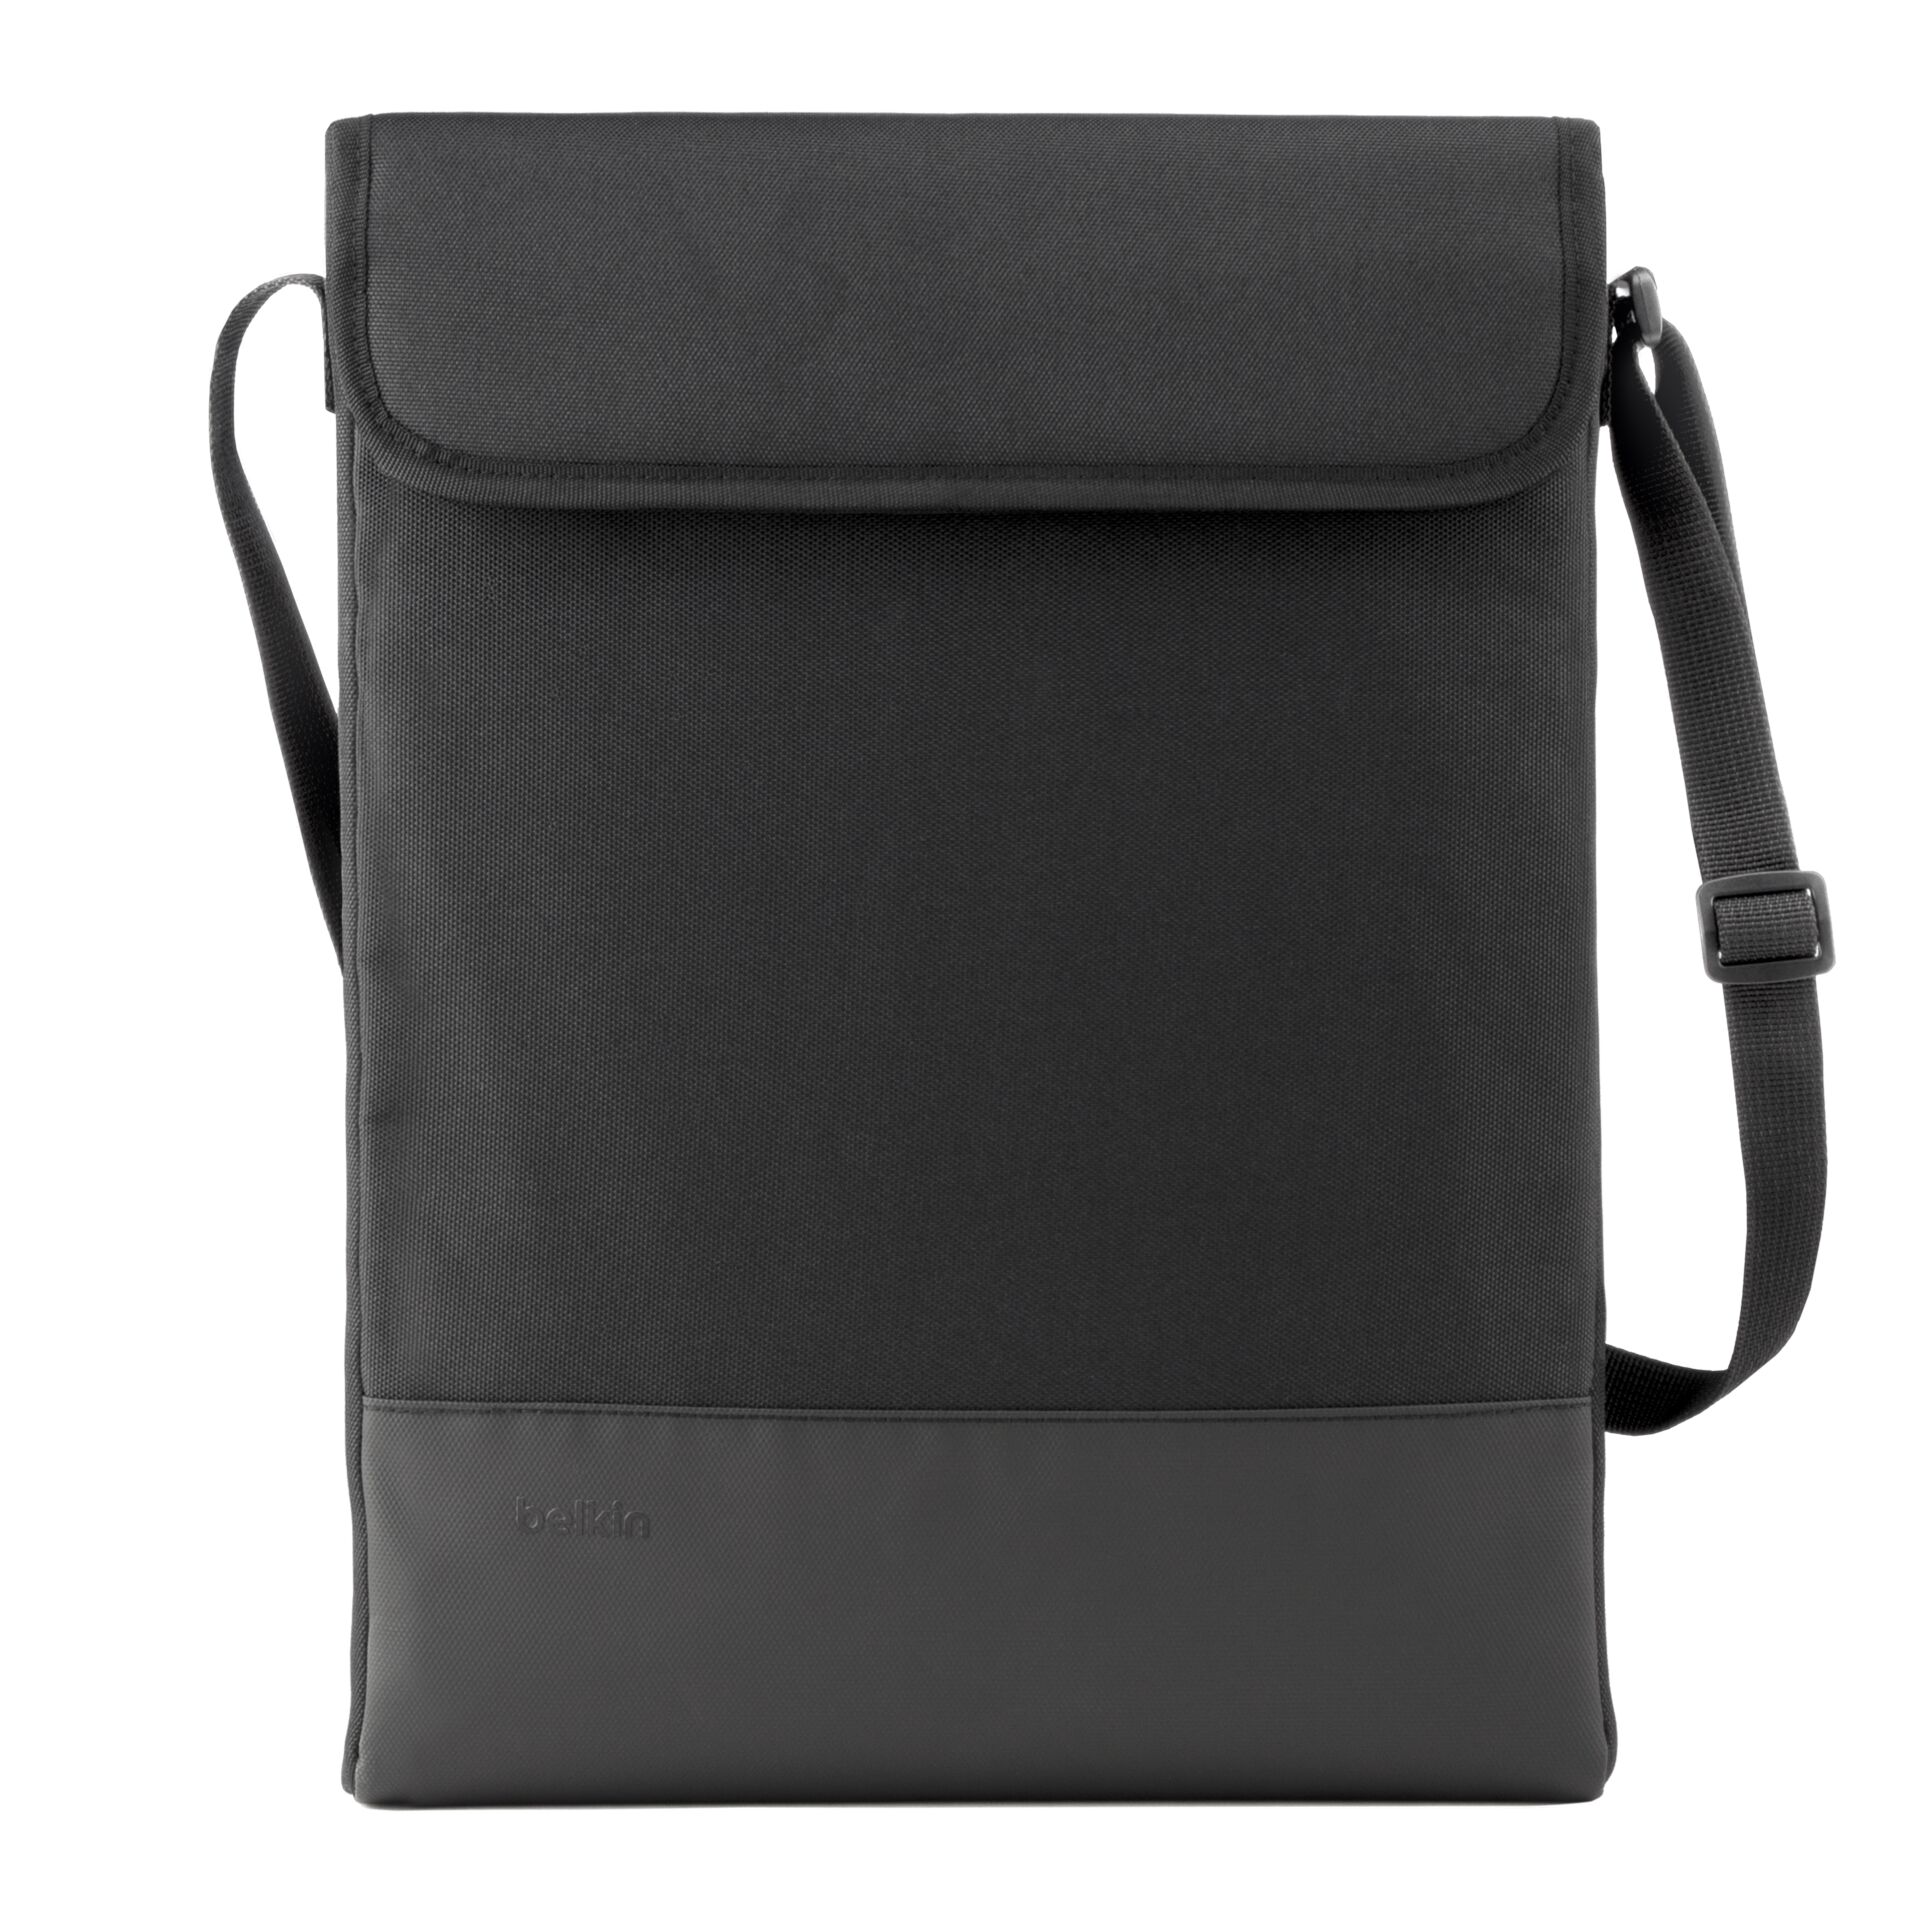 13 Zoll Belkin Notebook Tasche 11-13, schwarz 